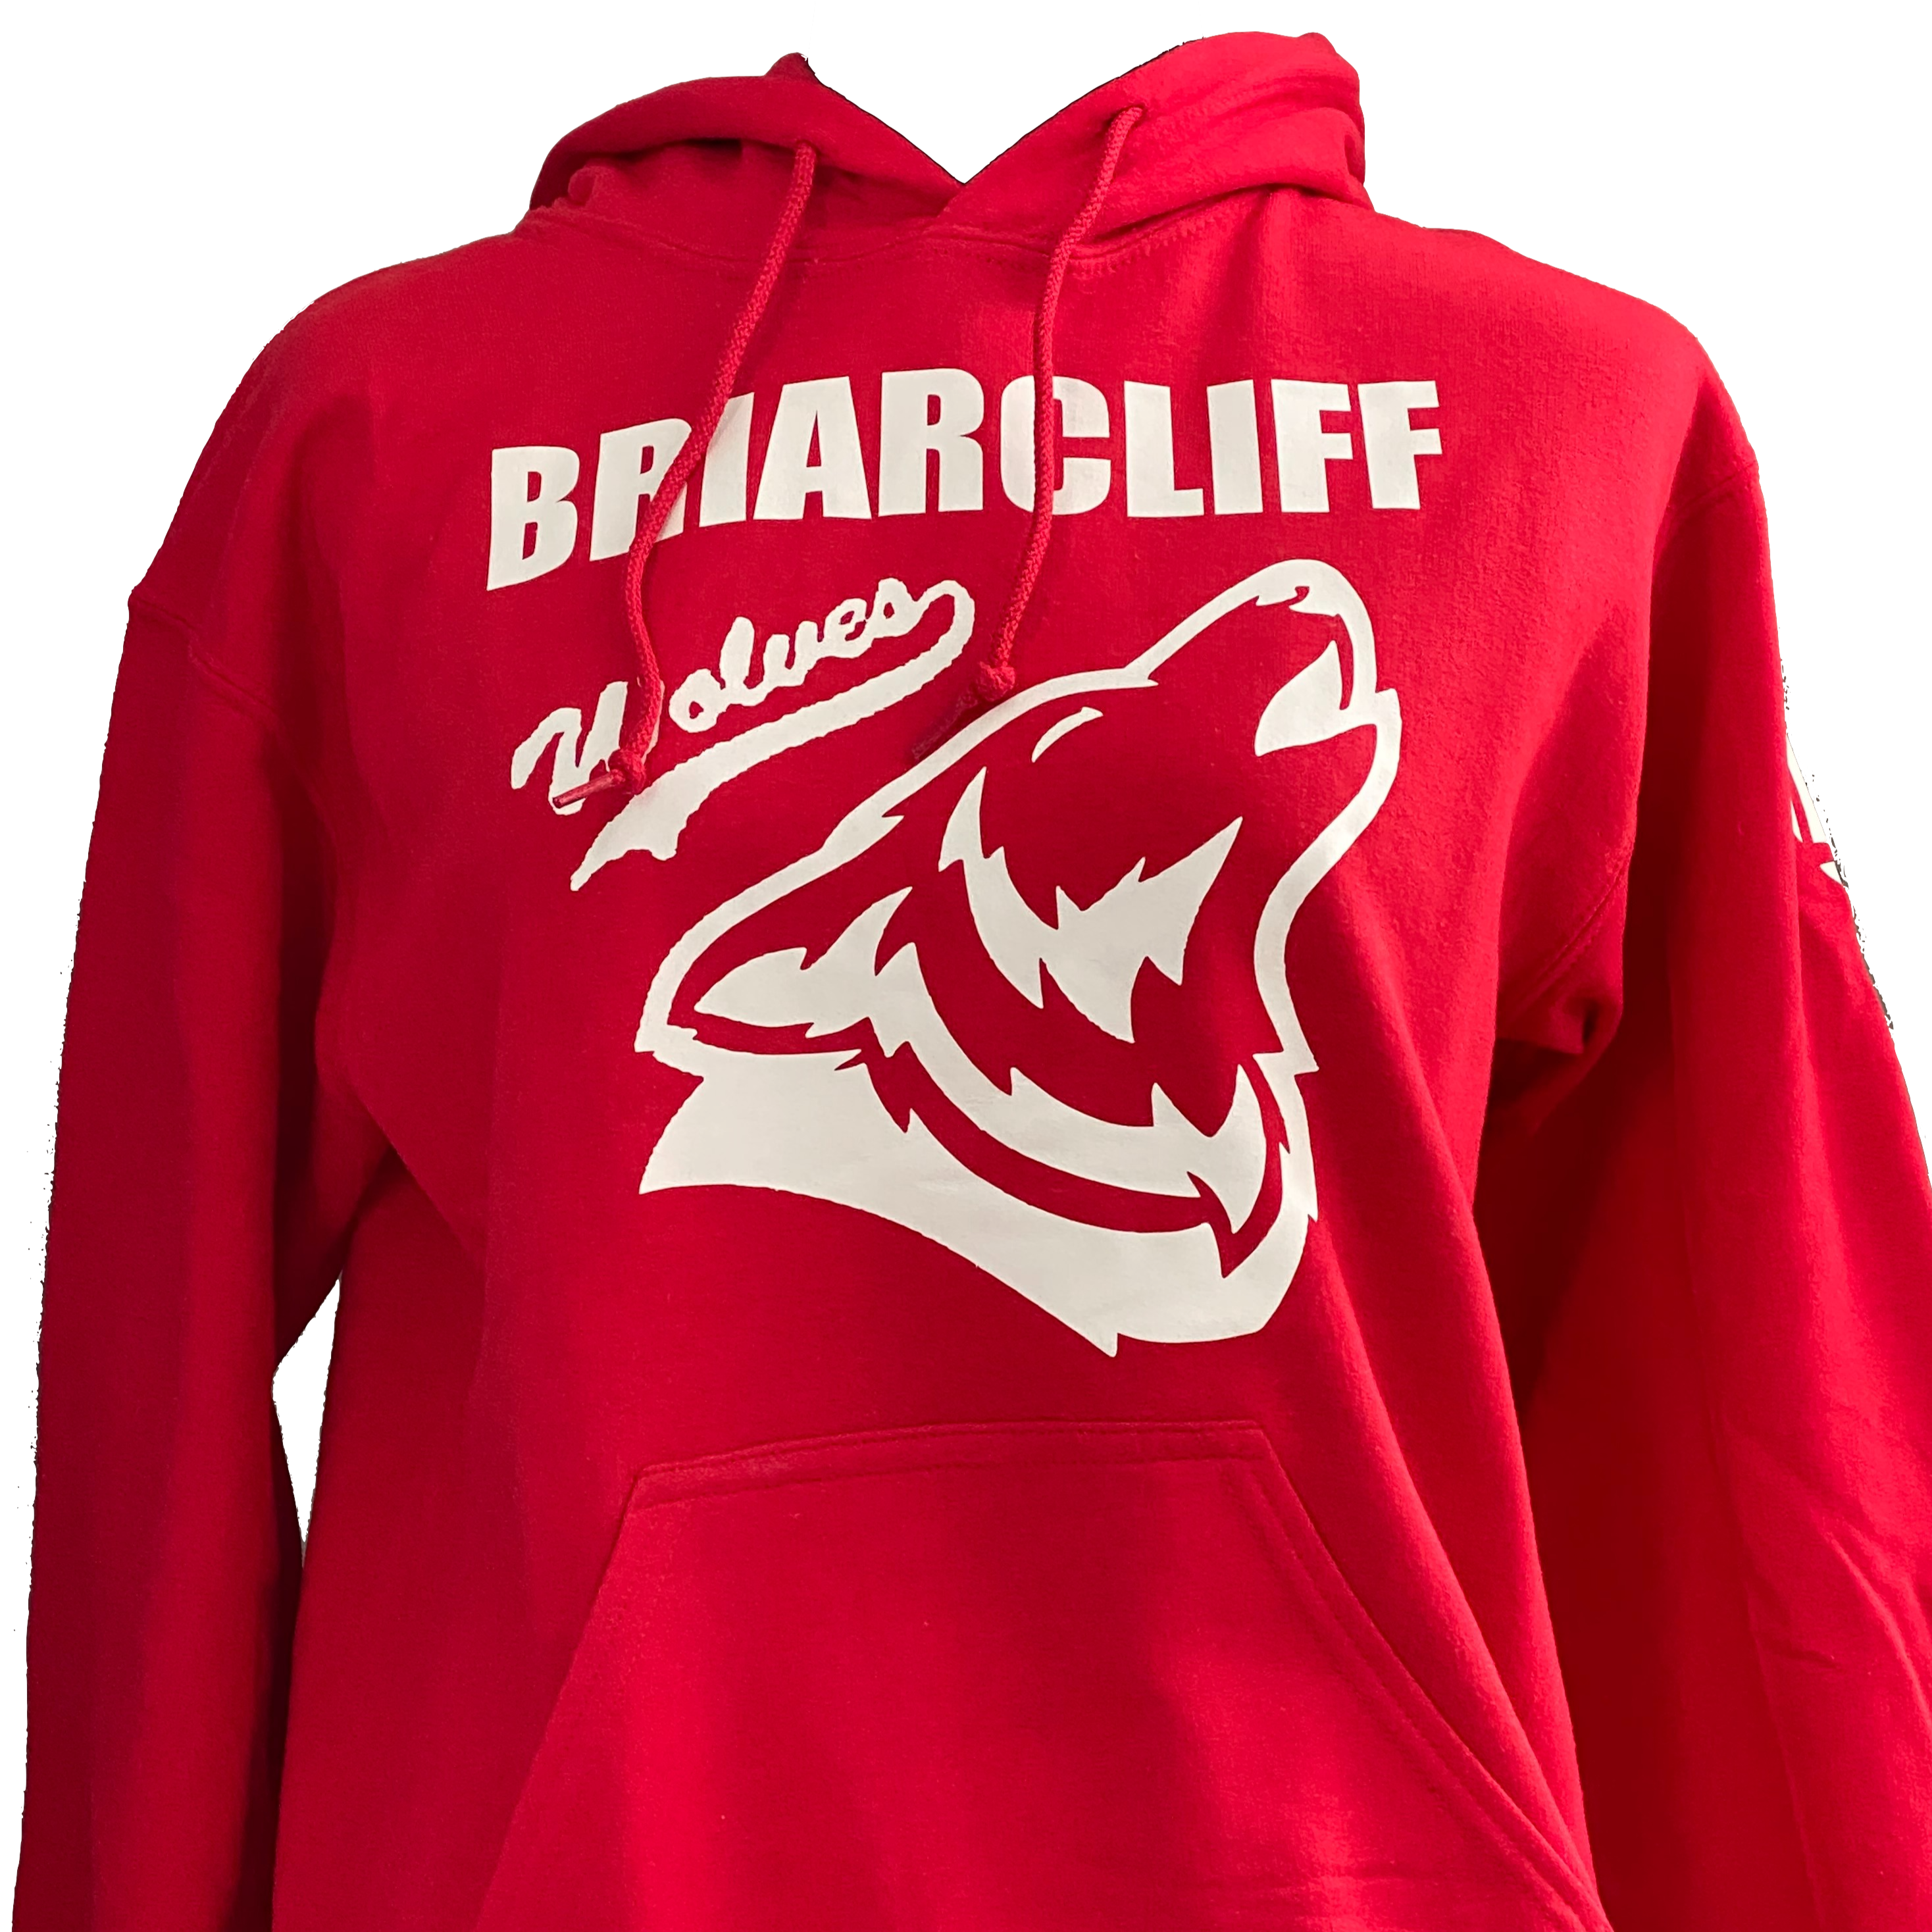 Briarcliff Wolves Red Adult Hoodie